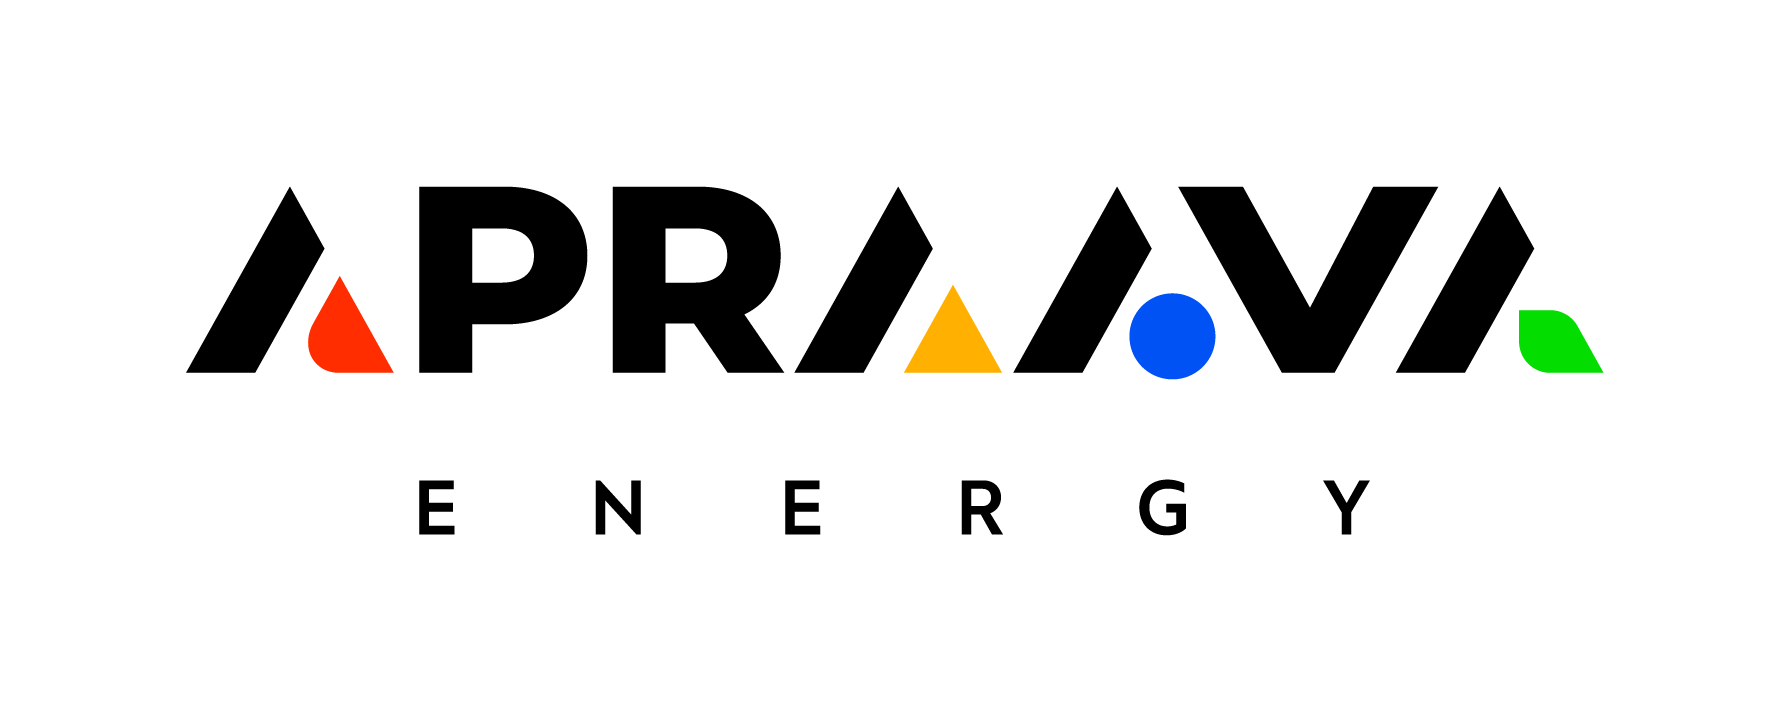 Apraava Energy logo